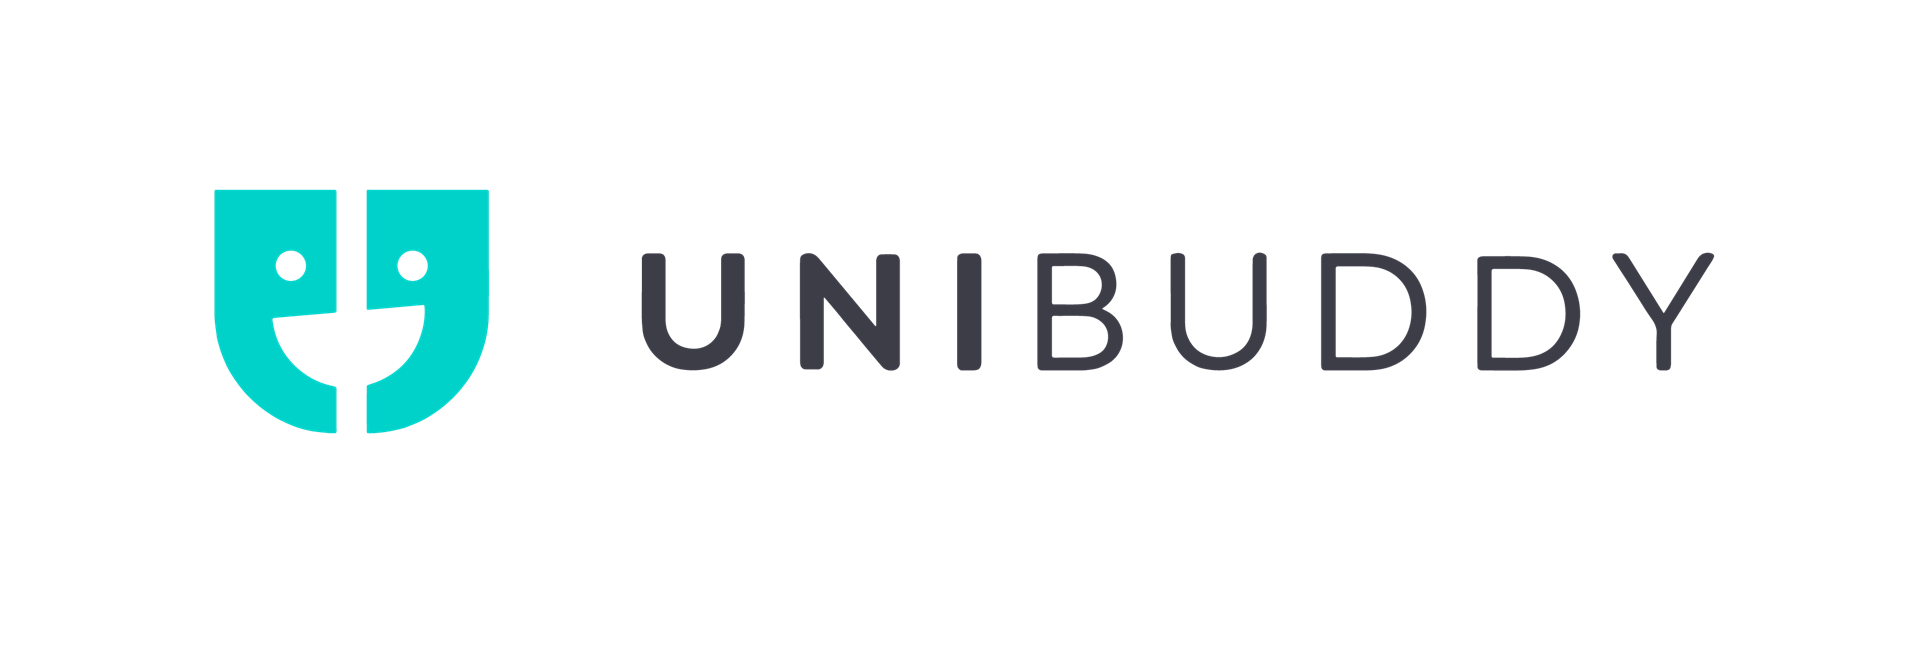 Unibuddy (opens in a new window)